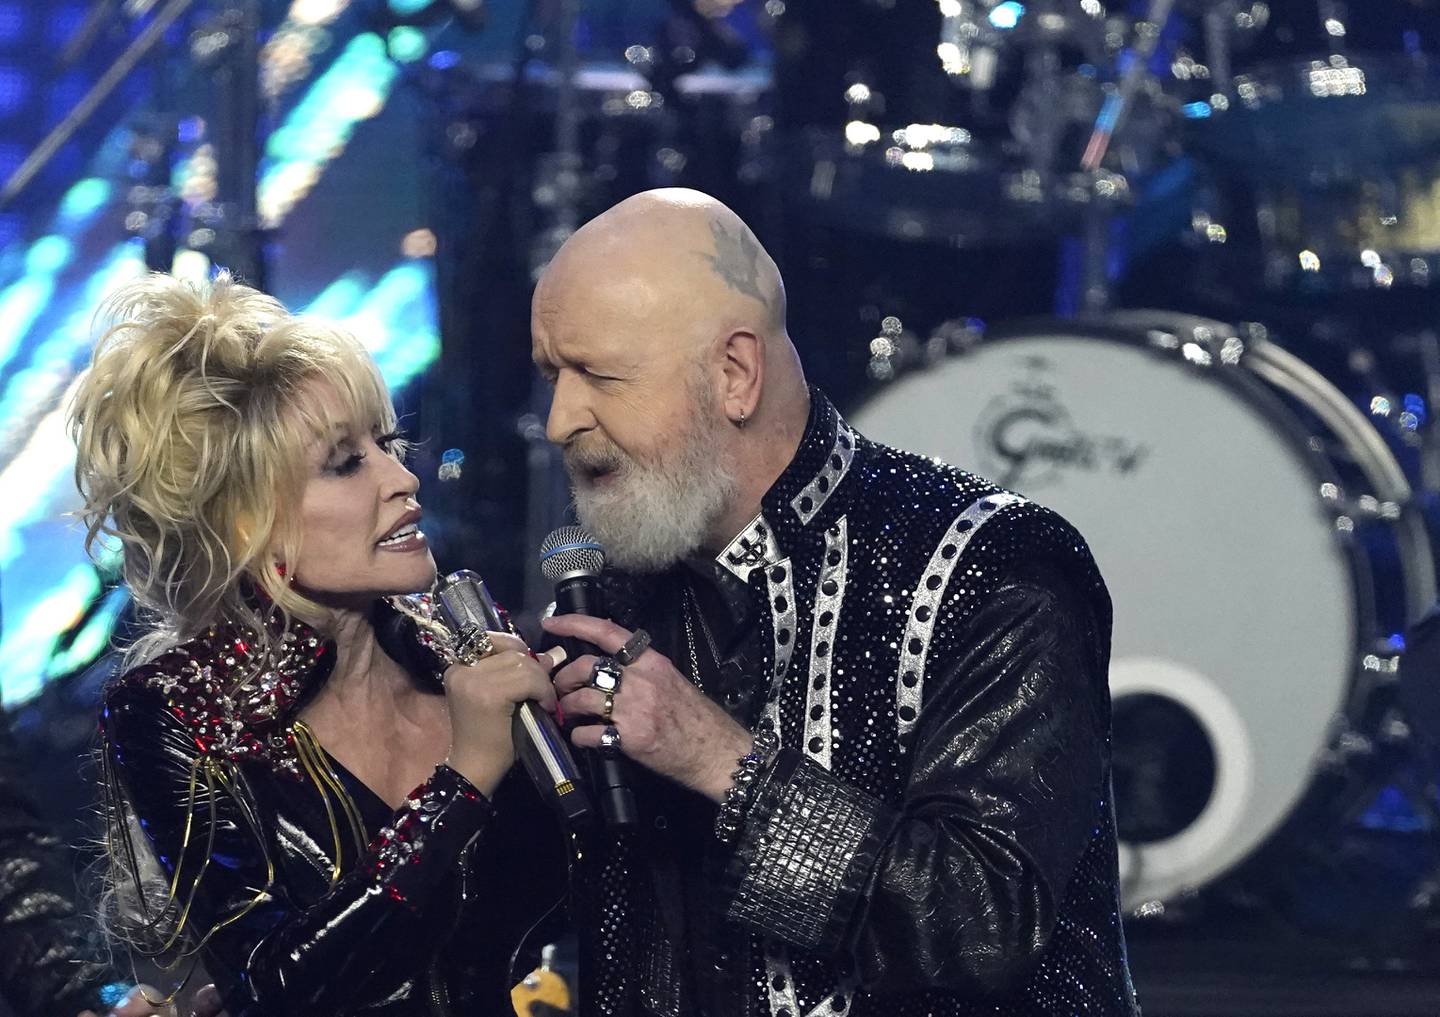 Dolly Parton med Rob Halford fra Judas Priest, da hun ble innlemmet i Rock & Roll Hall Of Fame. Parton synger også sammen med Halford på det nye albumet "Rockstar".